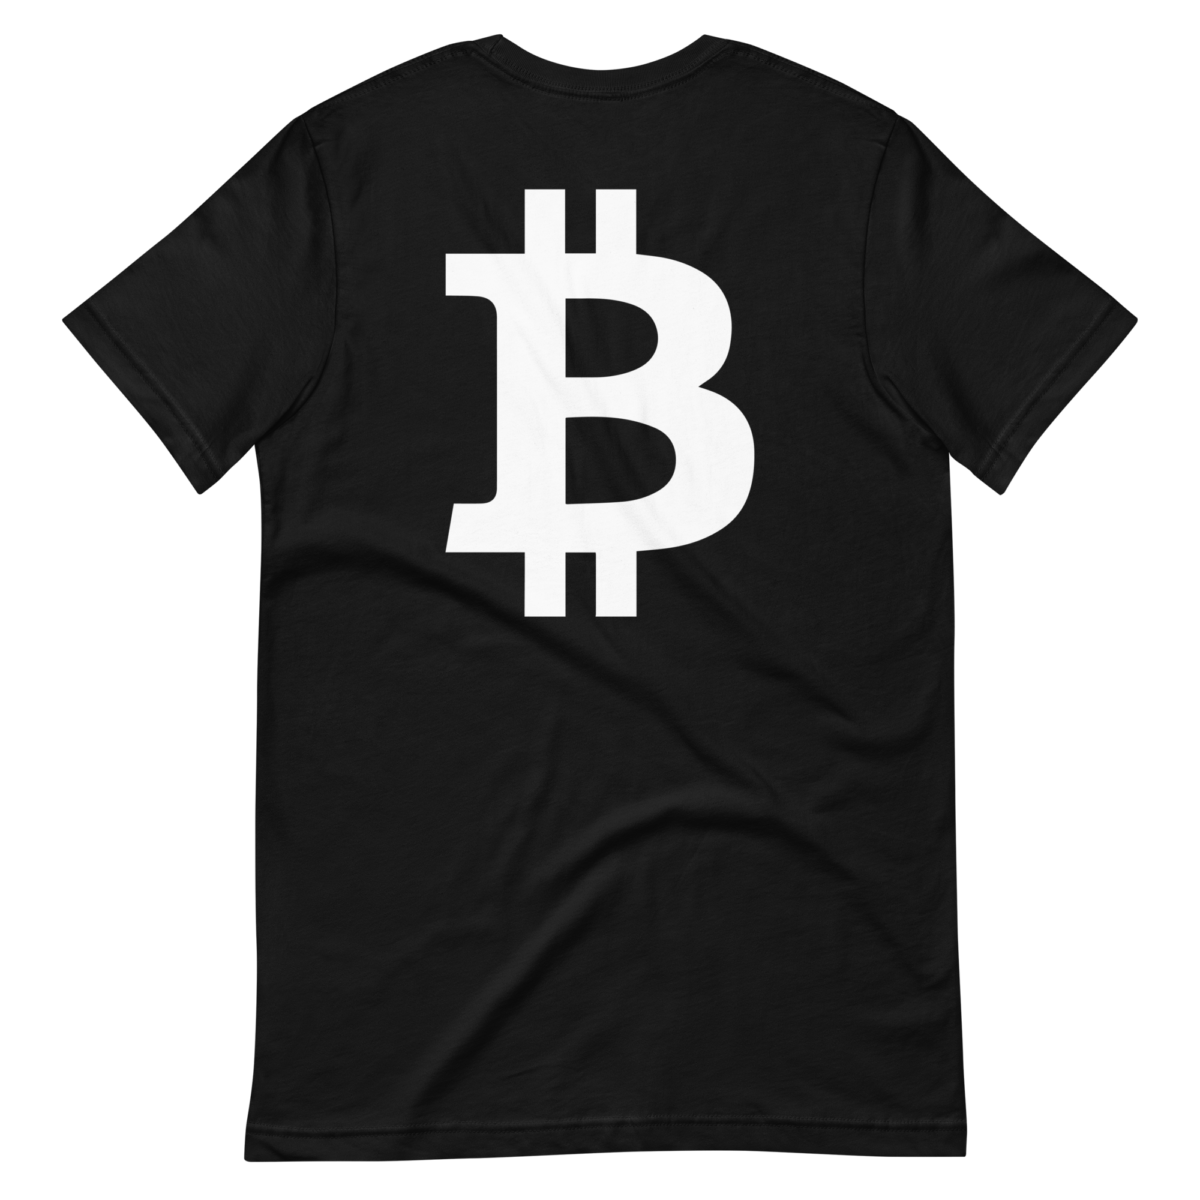 unisex staple t shirt black back 6330bd25aedc3 - Bitcoin: Think Big